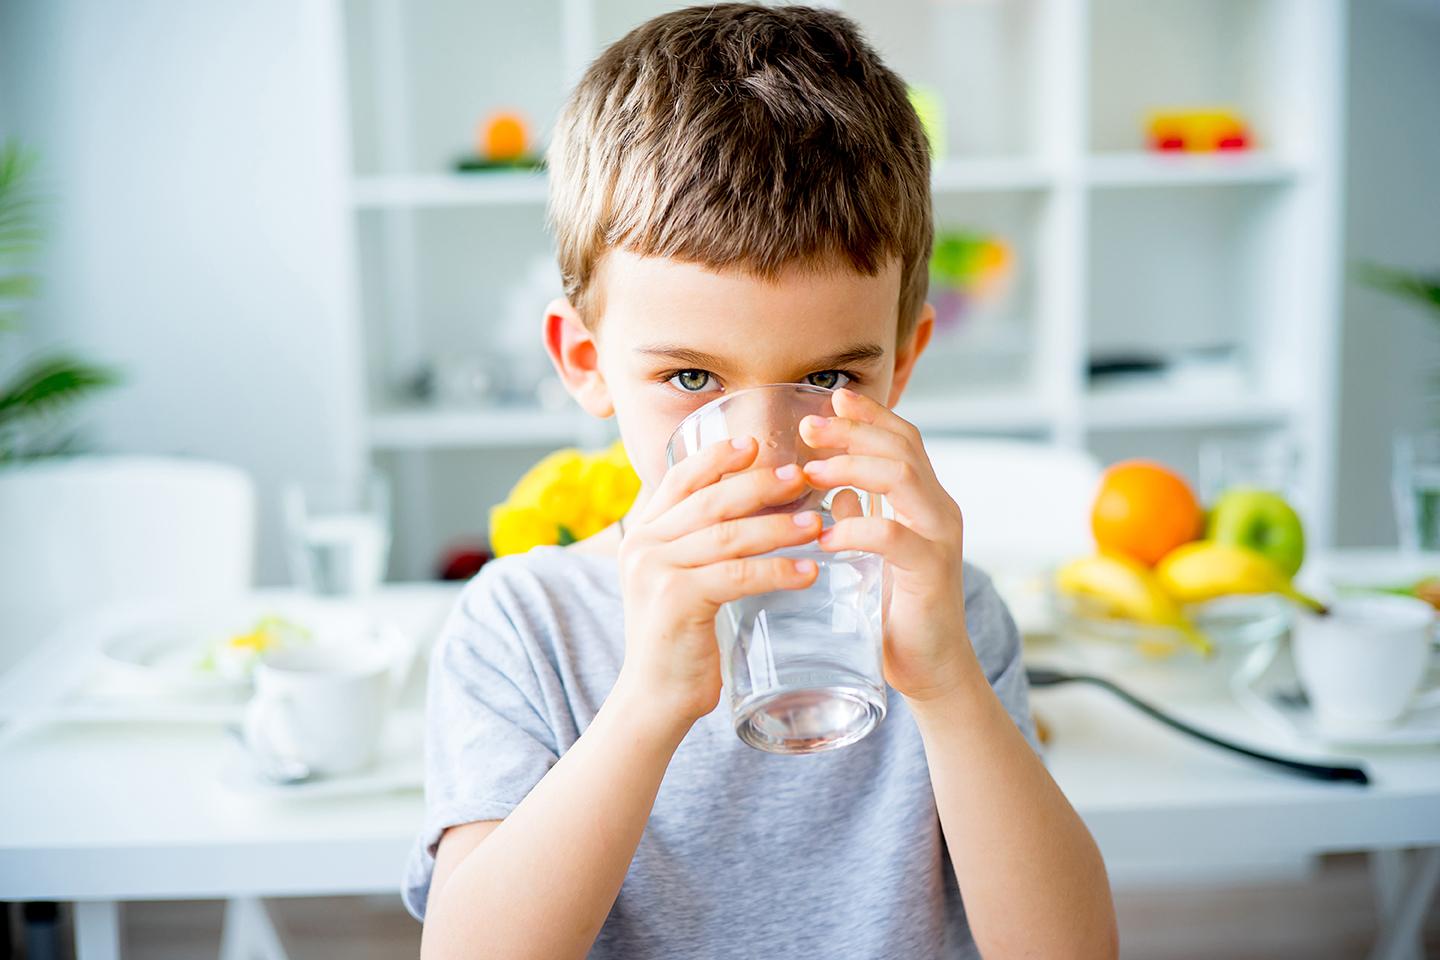 Ljetovanje bez bolesti: Pazite se zaraza iz hrane i vode